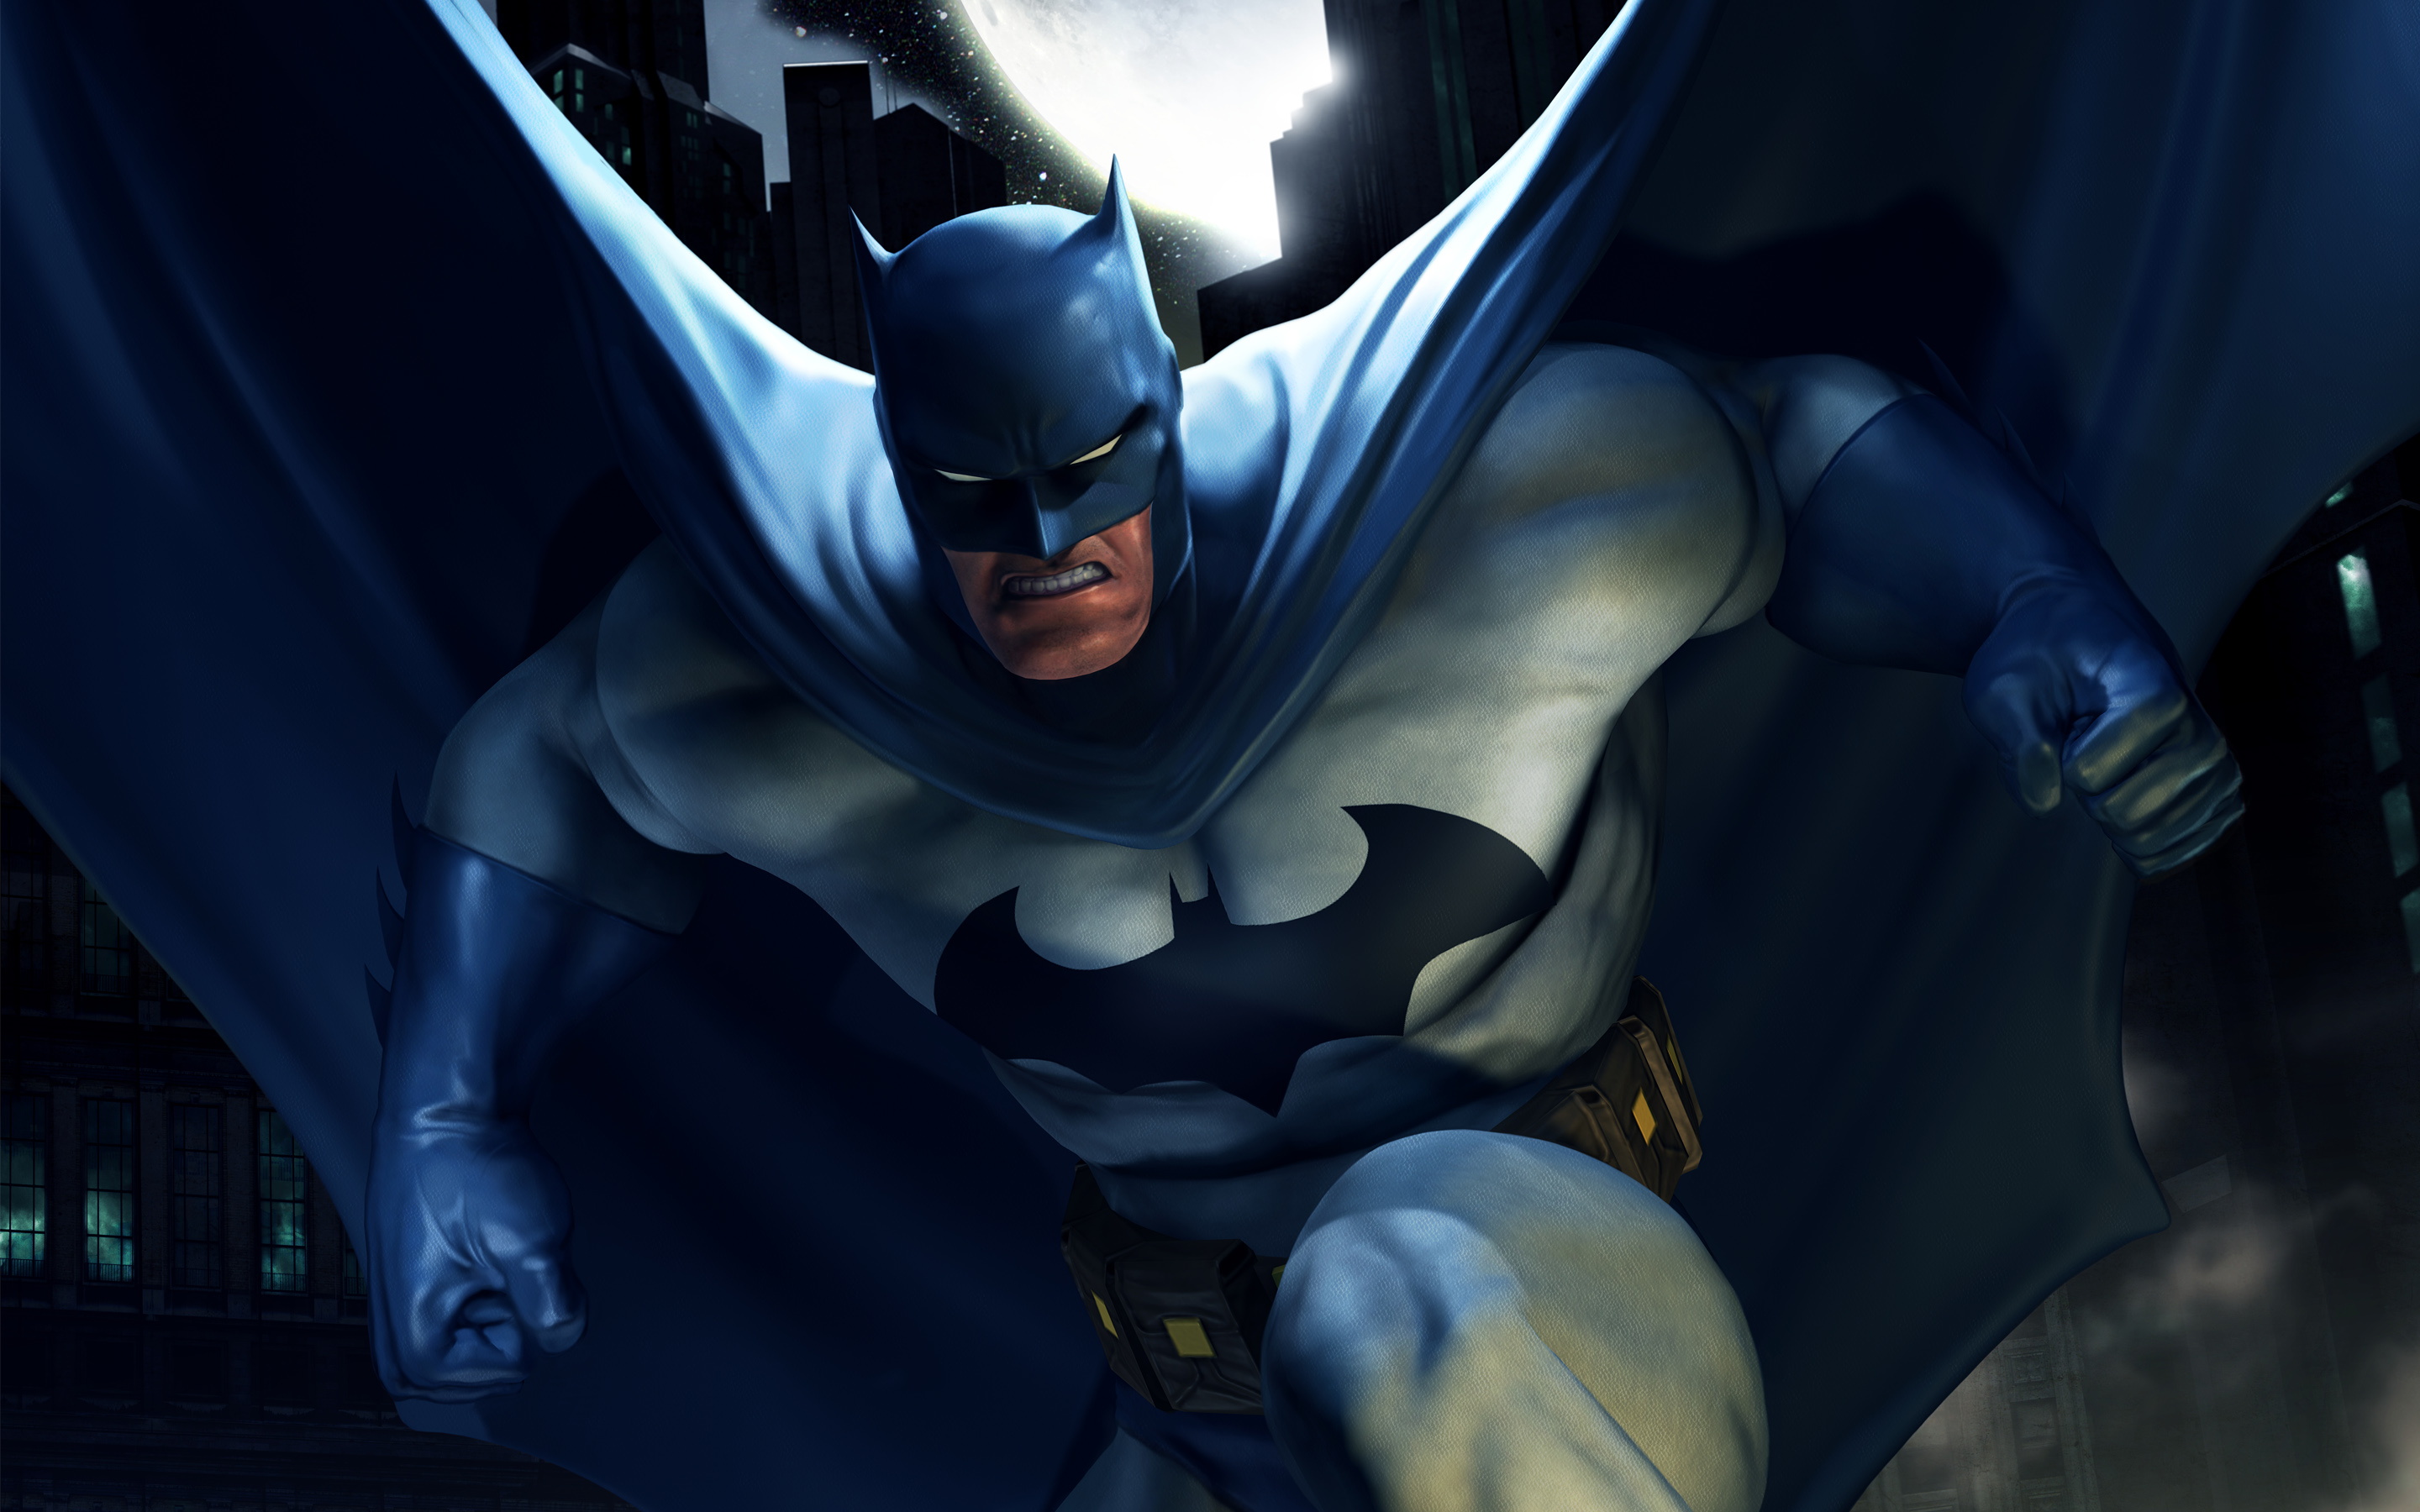 superhero wallpaper,batman,superhero,fictional character,justice league,cg artwork